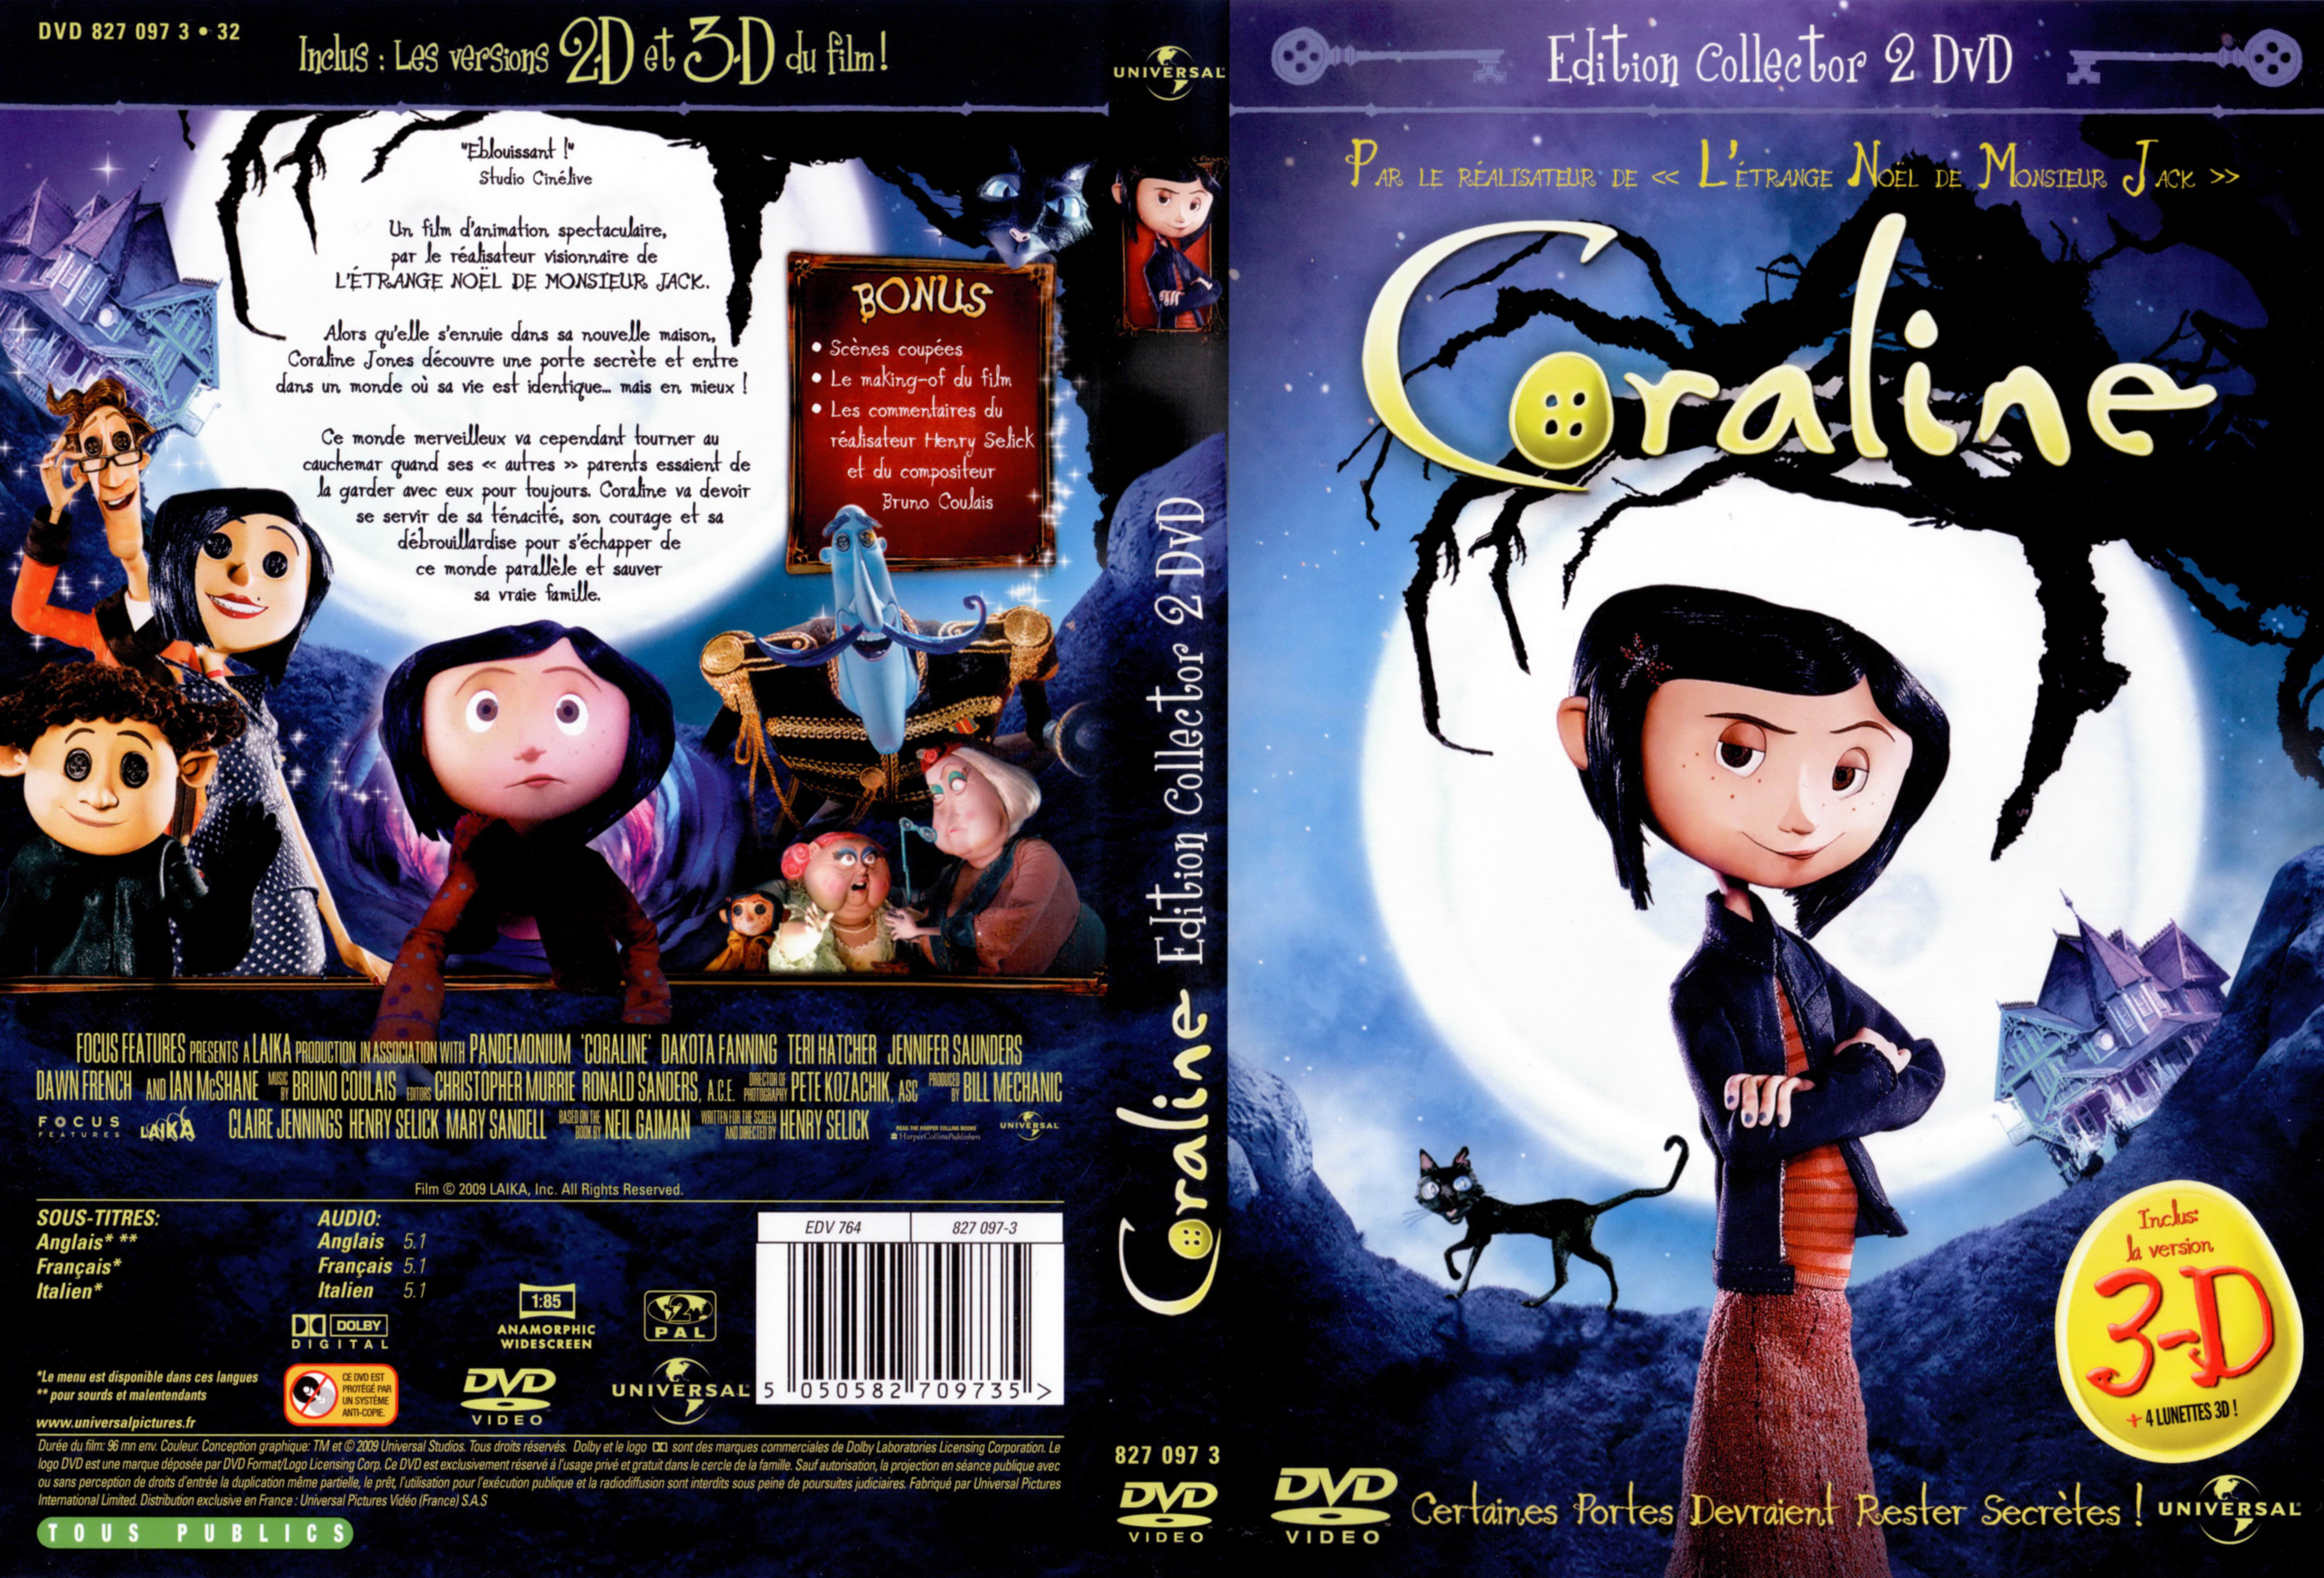 Jaquette DVD Coraline